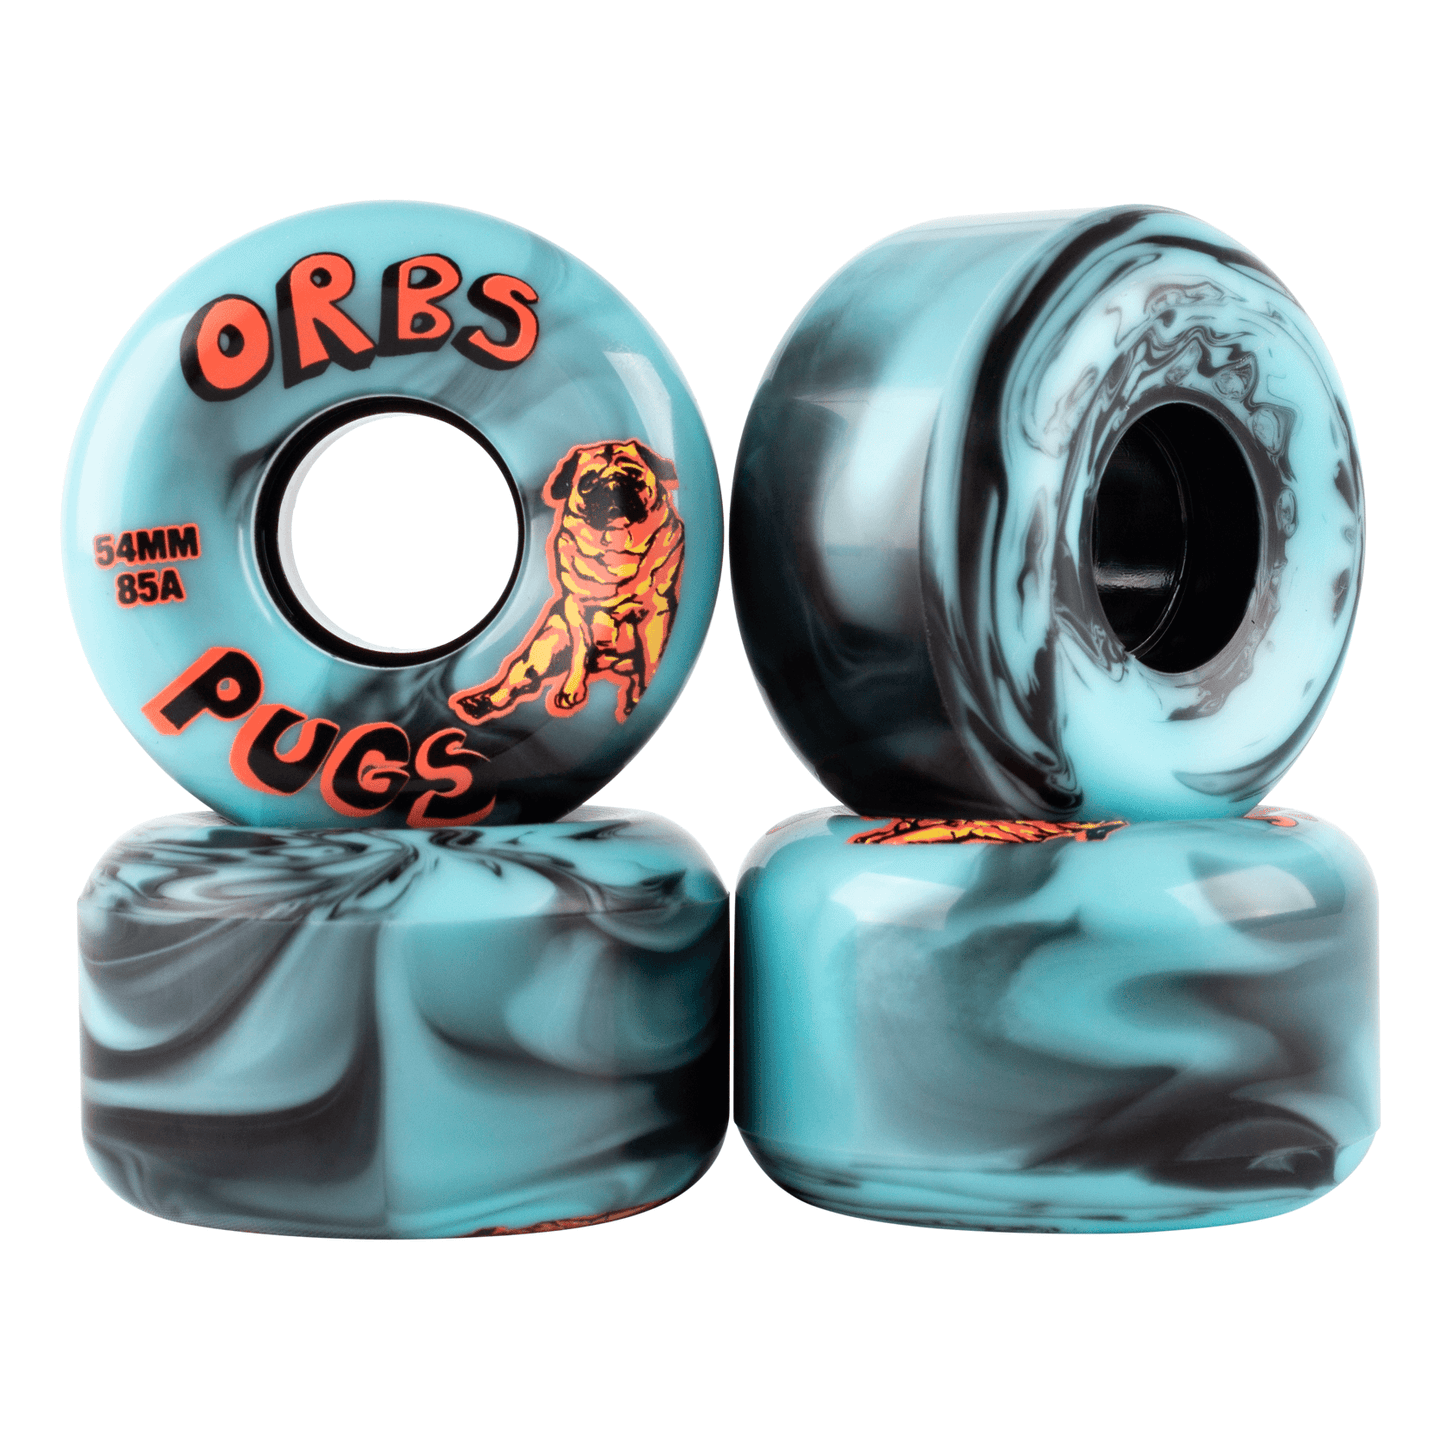 Orbs | 54mm Pugs - Black/Blue Swirl - 85a